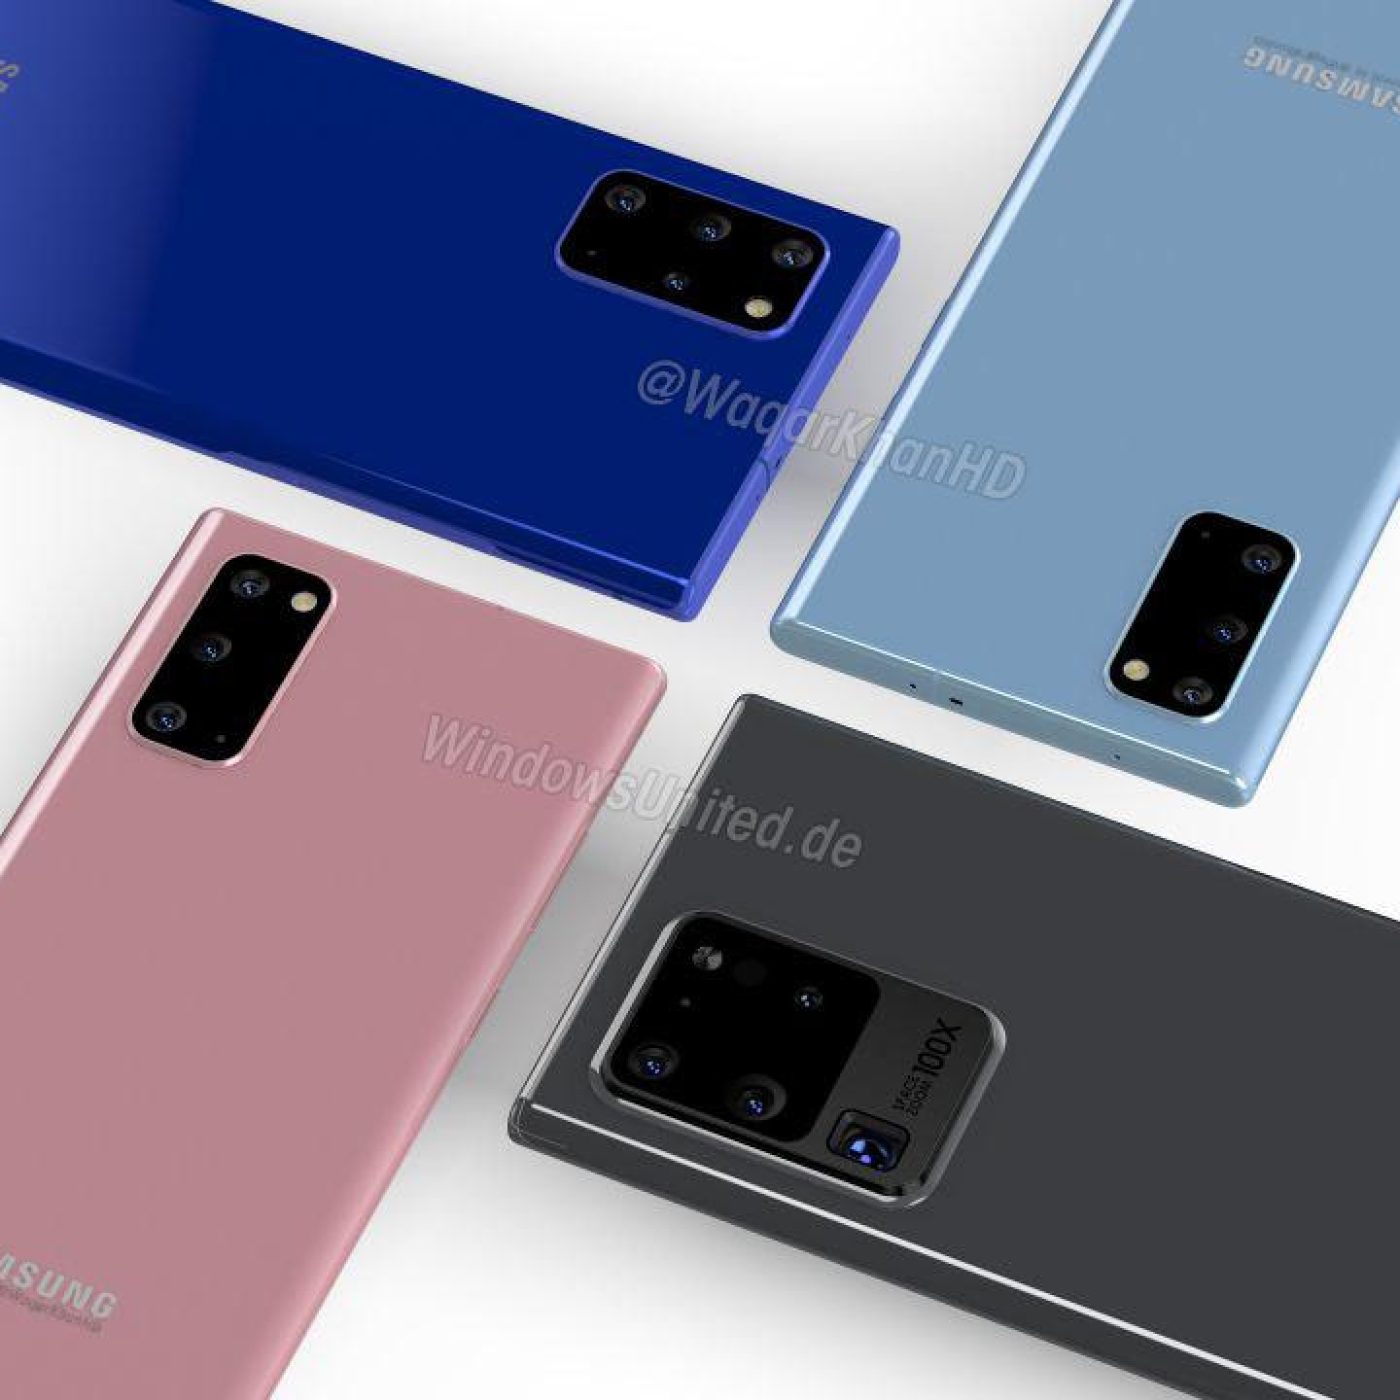 Samsung Galaxy Note 20 Ultra 5G – An absolute beast of a smartphone